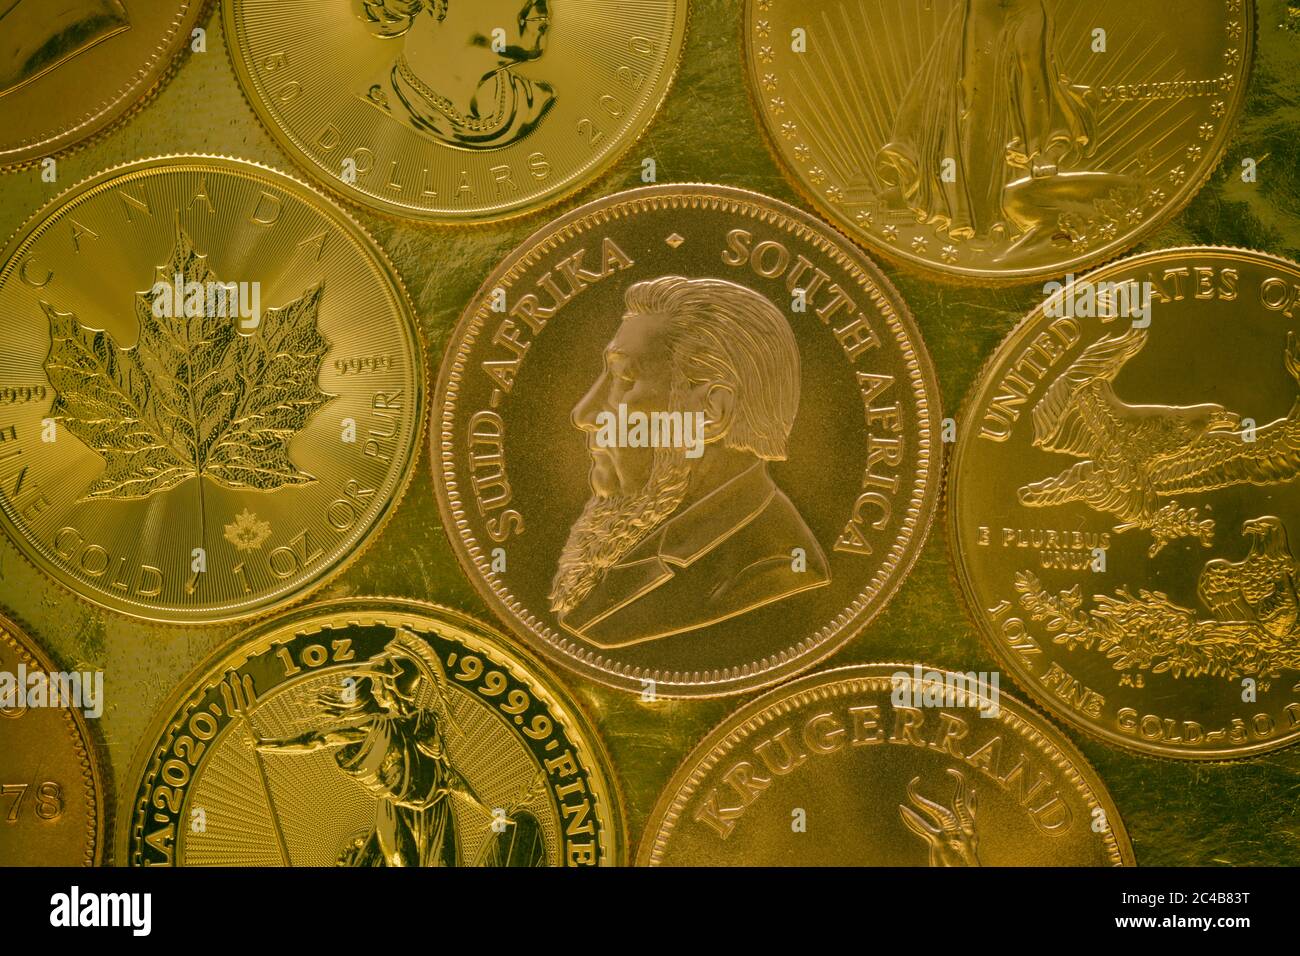 Goldmünzen 1 Unze Gold Kruger Vorderseite Paul Kruger zwischen anderen Goldmünzen Ahorn Blatt, Britannia, Golden Eagle Stockfoto